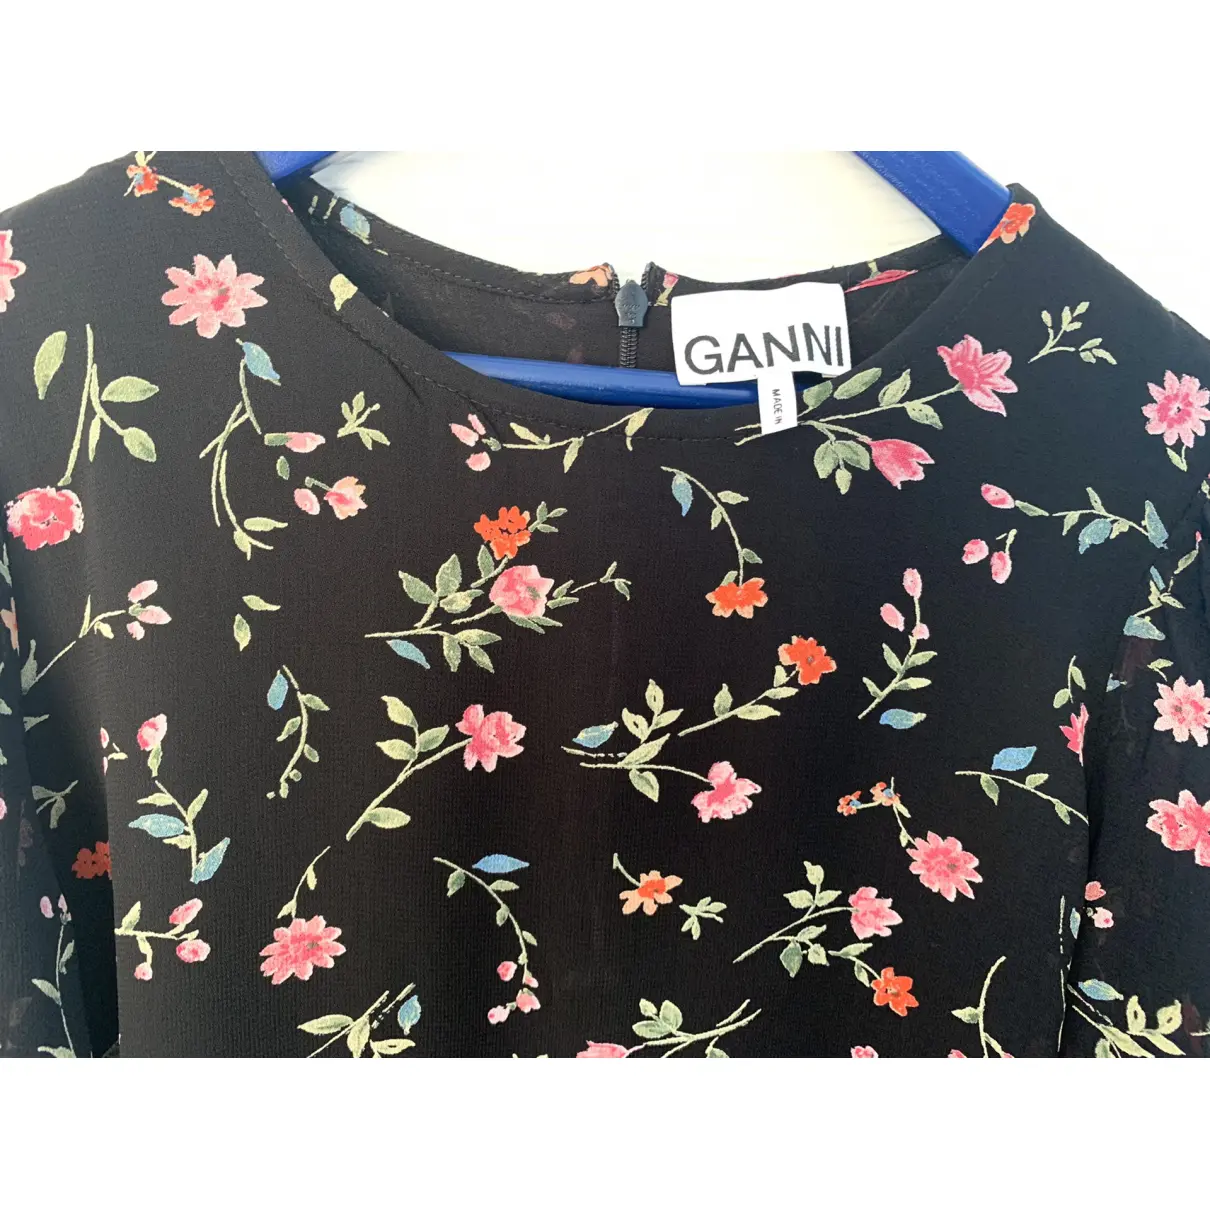 Buy Ganni Spring Summer 2019 mid-length dress online